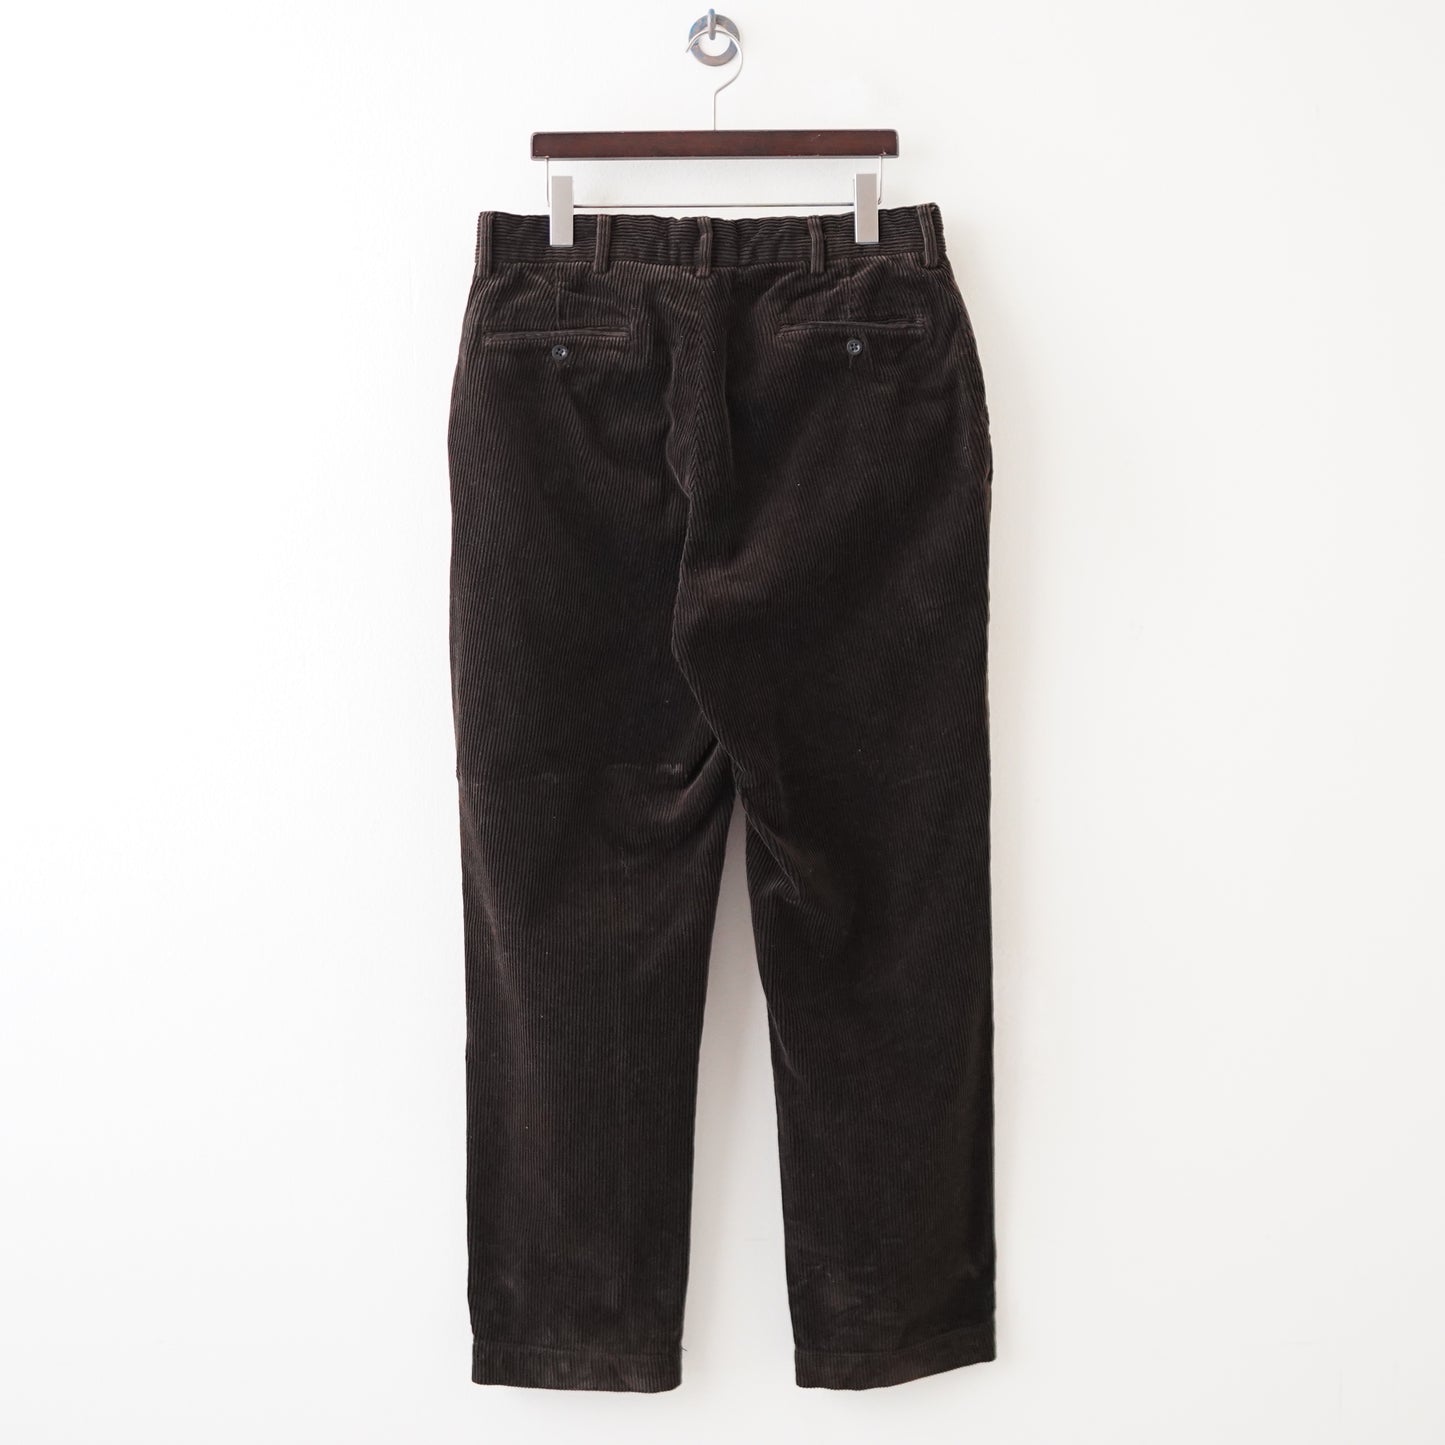 Polo by Ralph Lauren corduroy pants